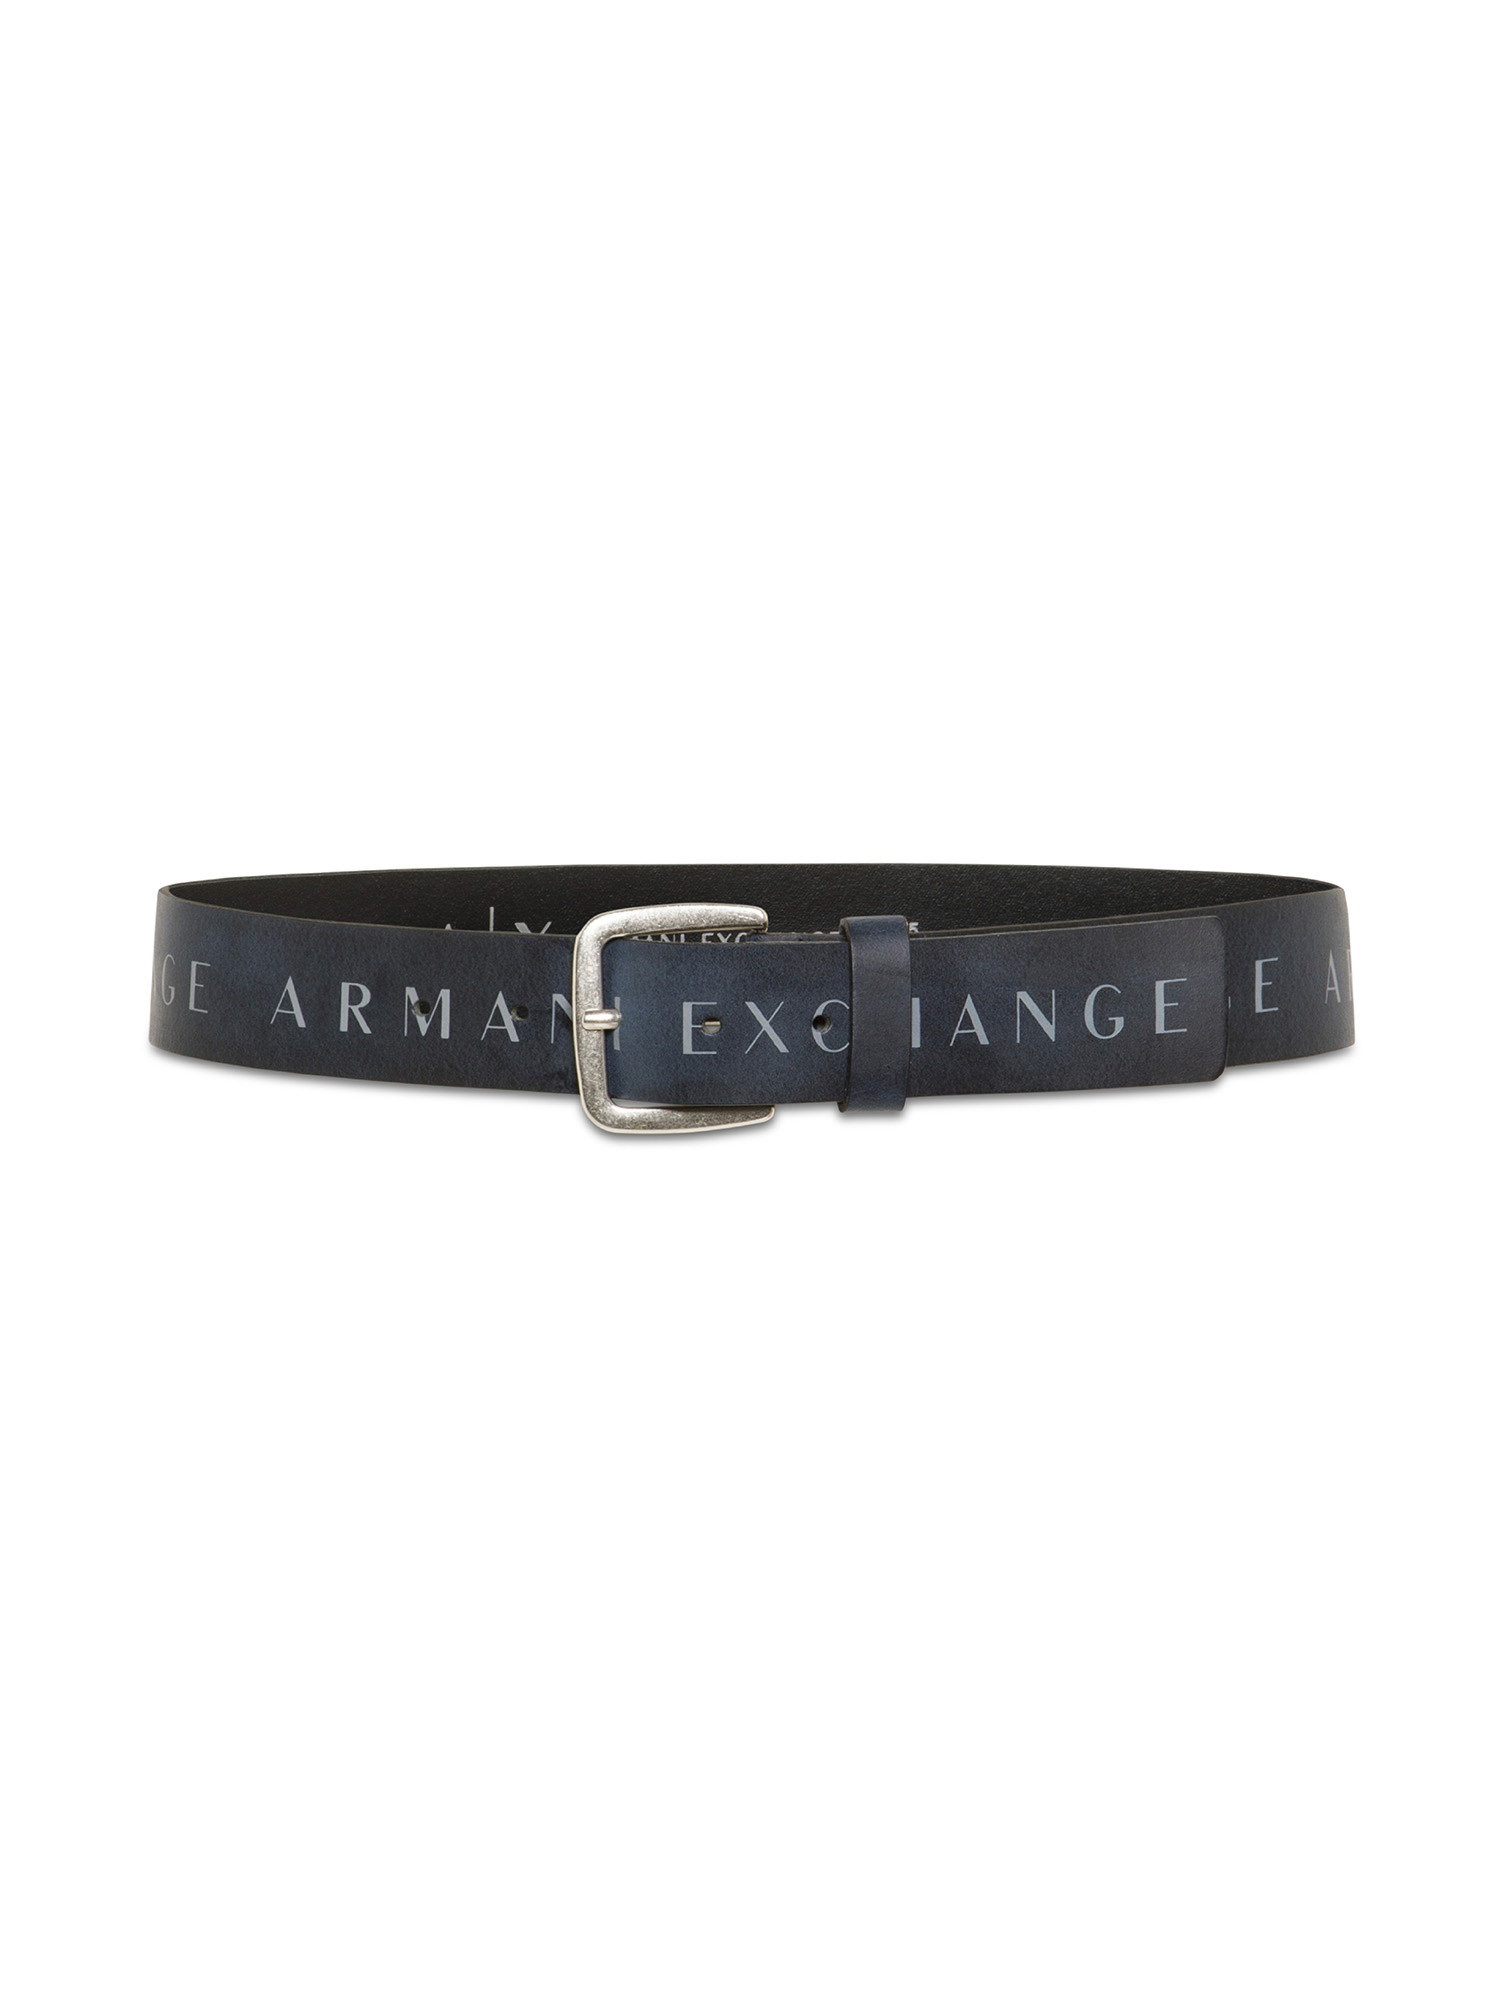 Armani Exchange - Cintura in pelle con logo stampato, Blu scuro, large image number 1